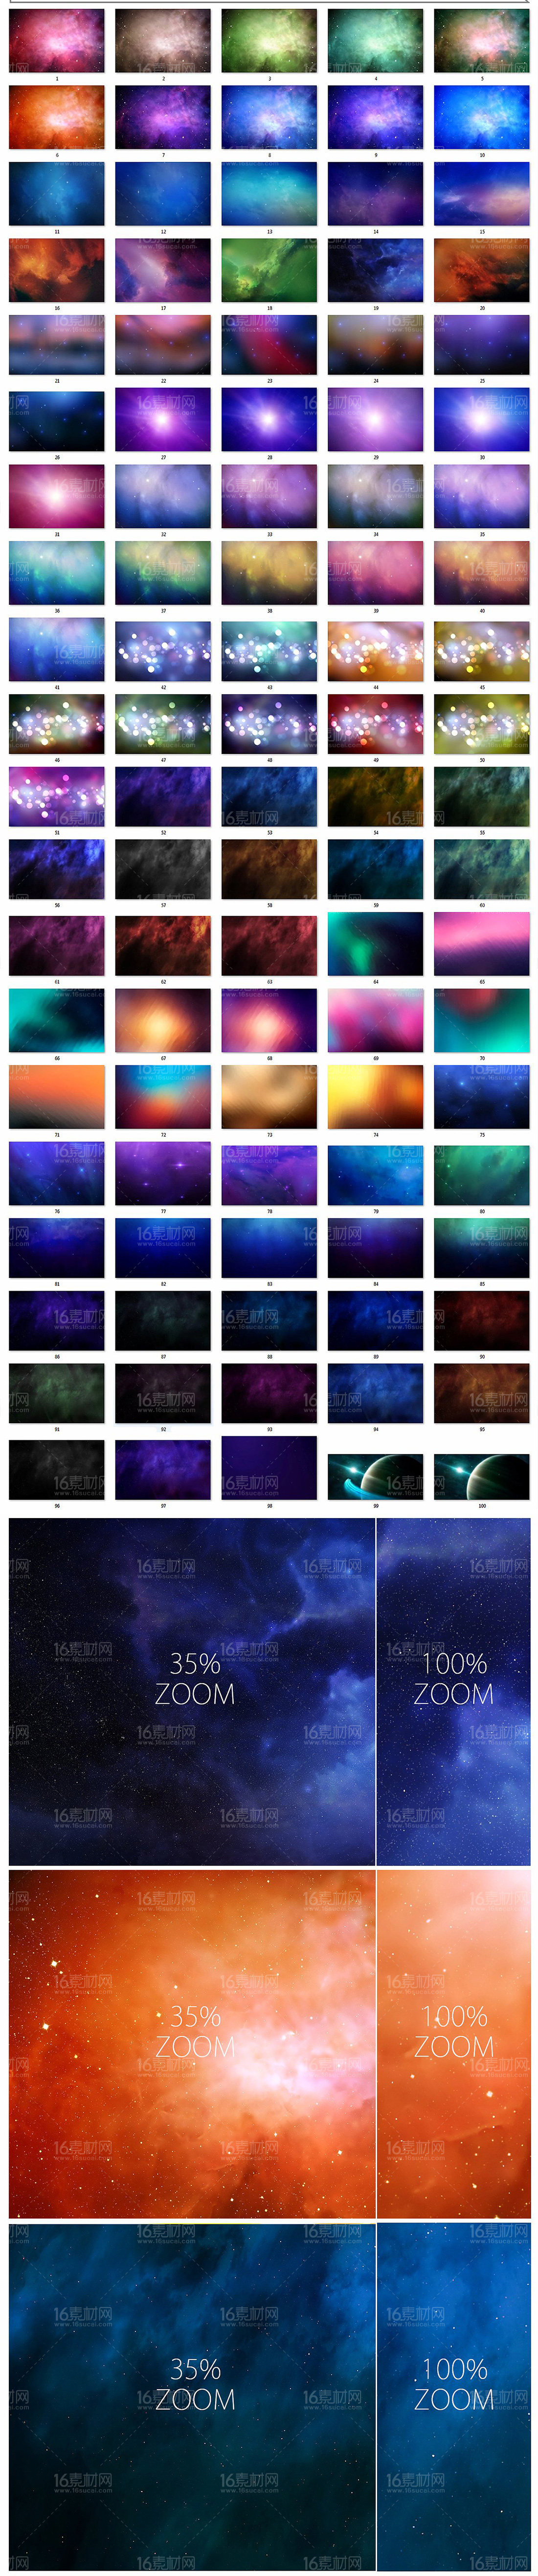 100-space-backgrounds-prev-.jpg